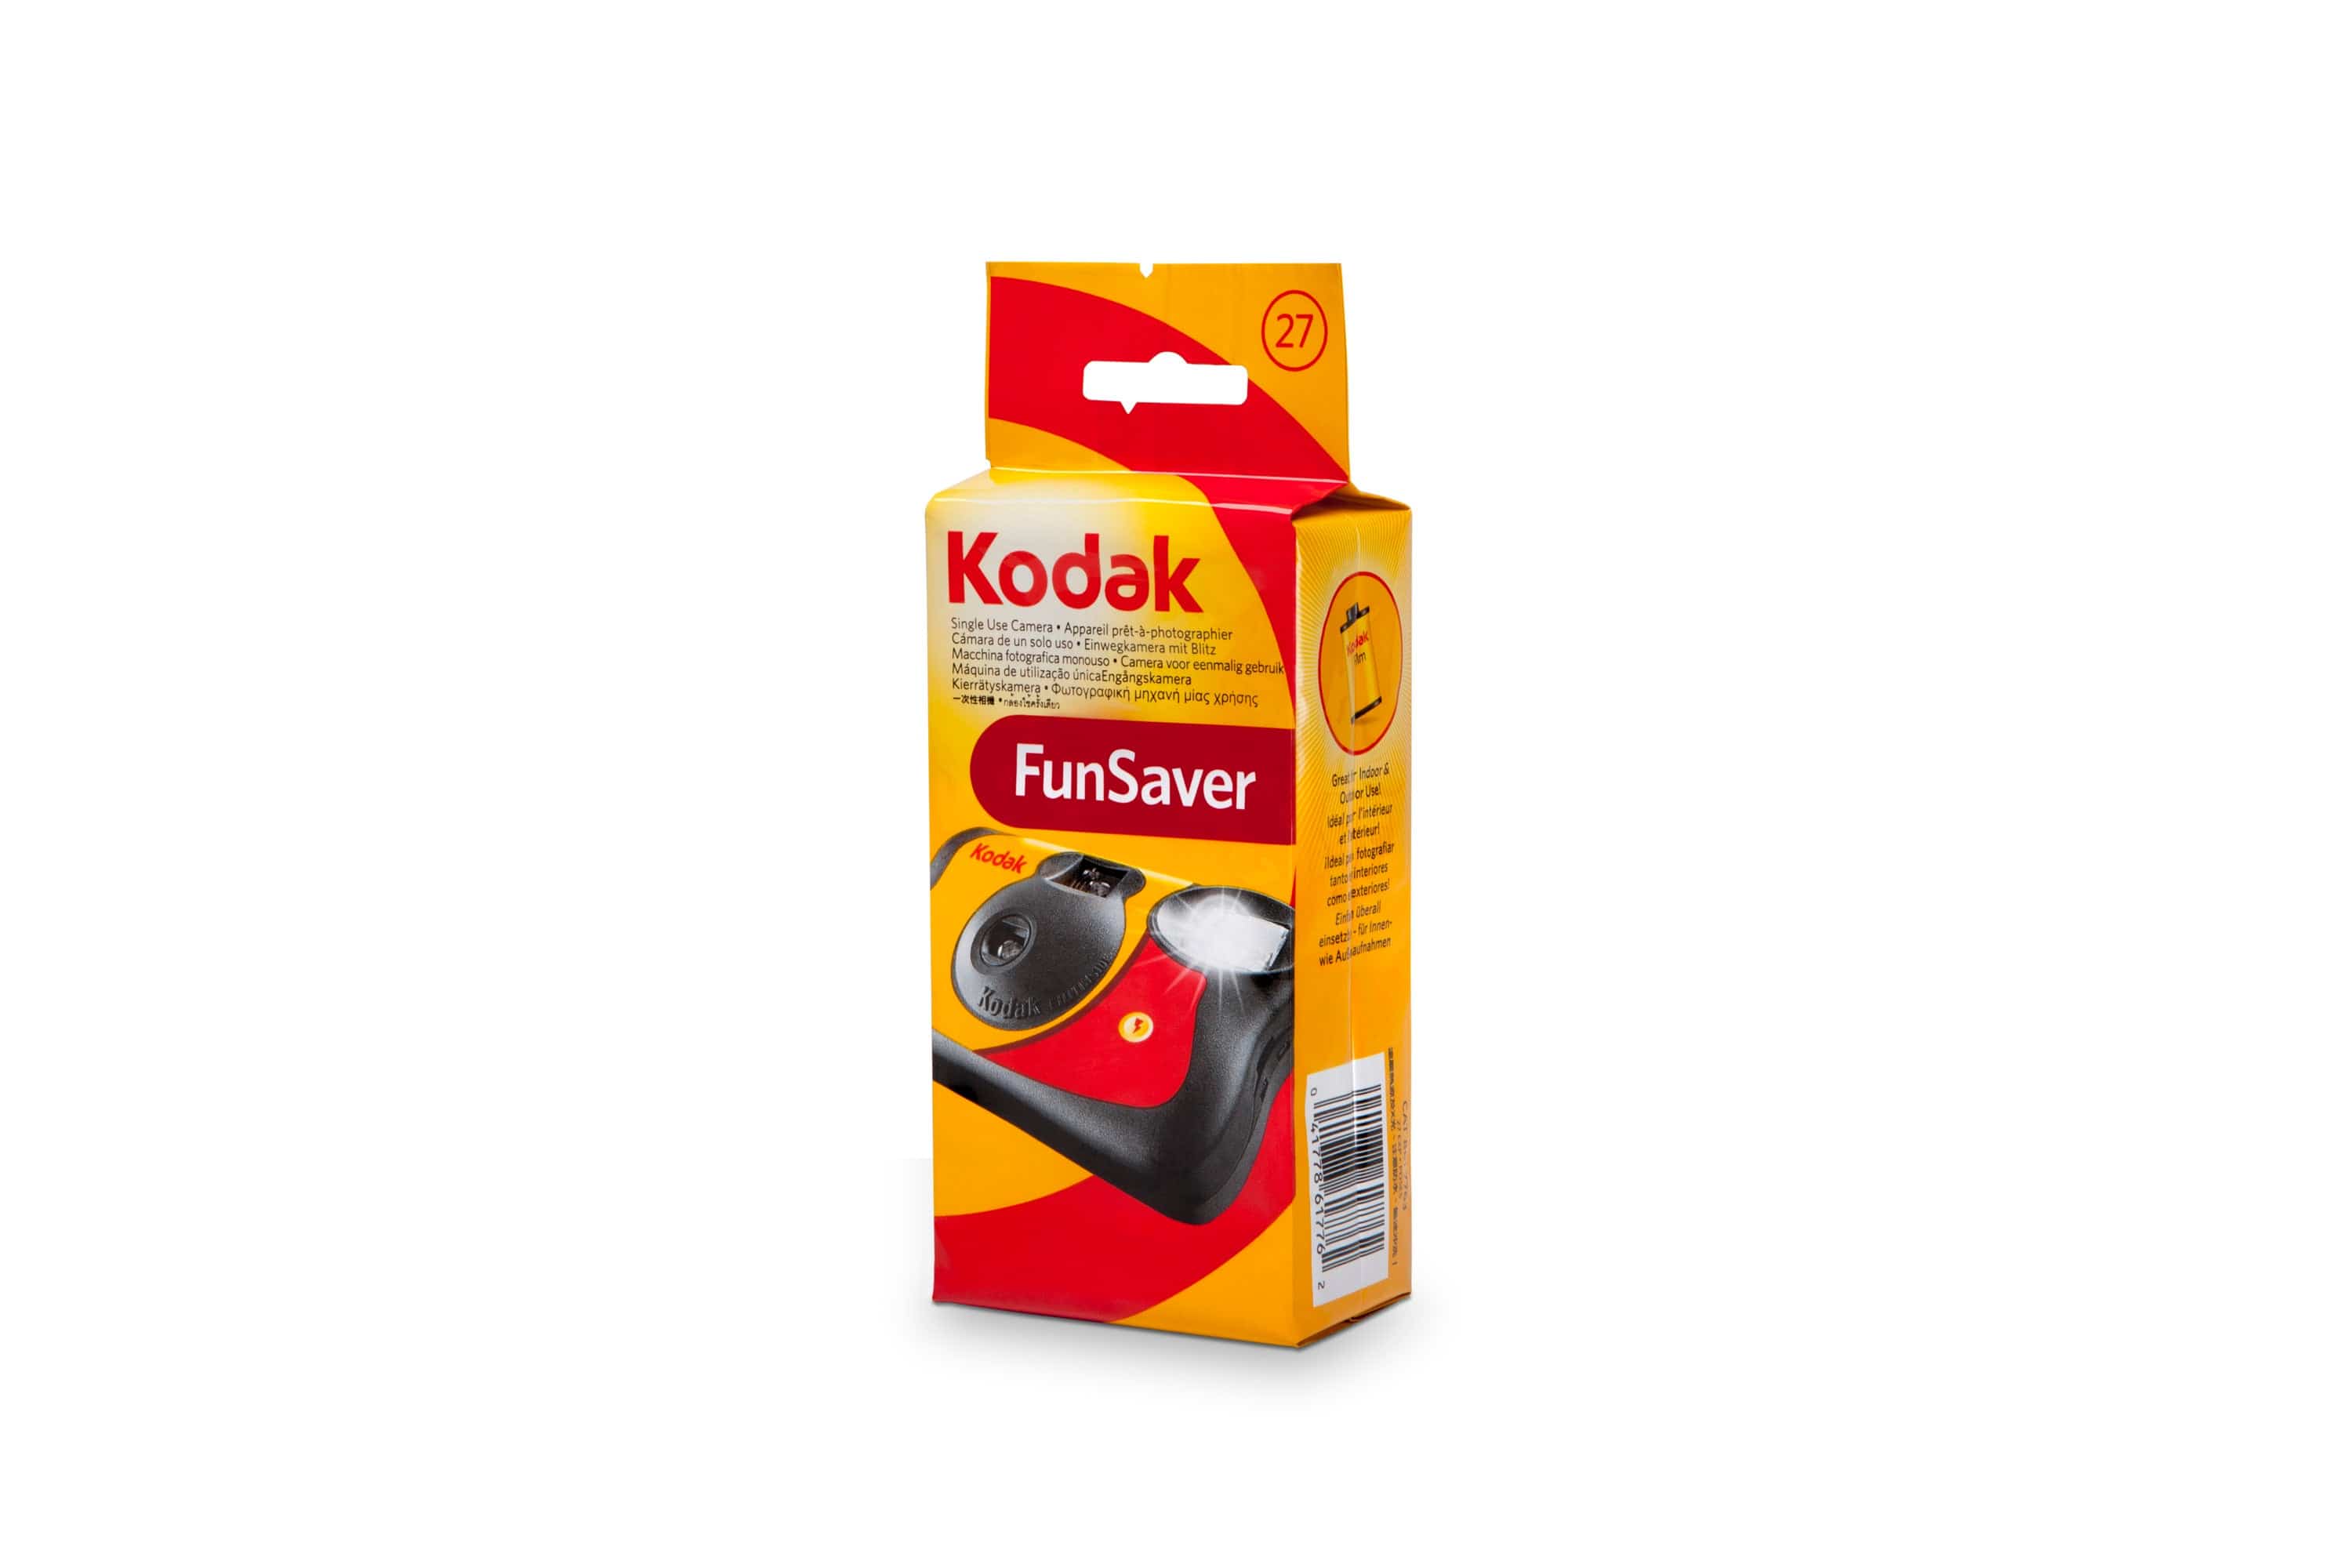 Kodak Funsaver One Time Use Film Camera (2-pack) - Kodak